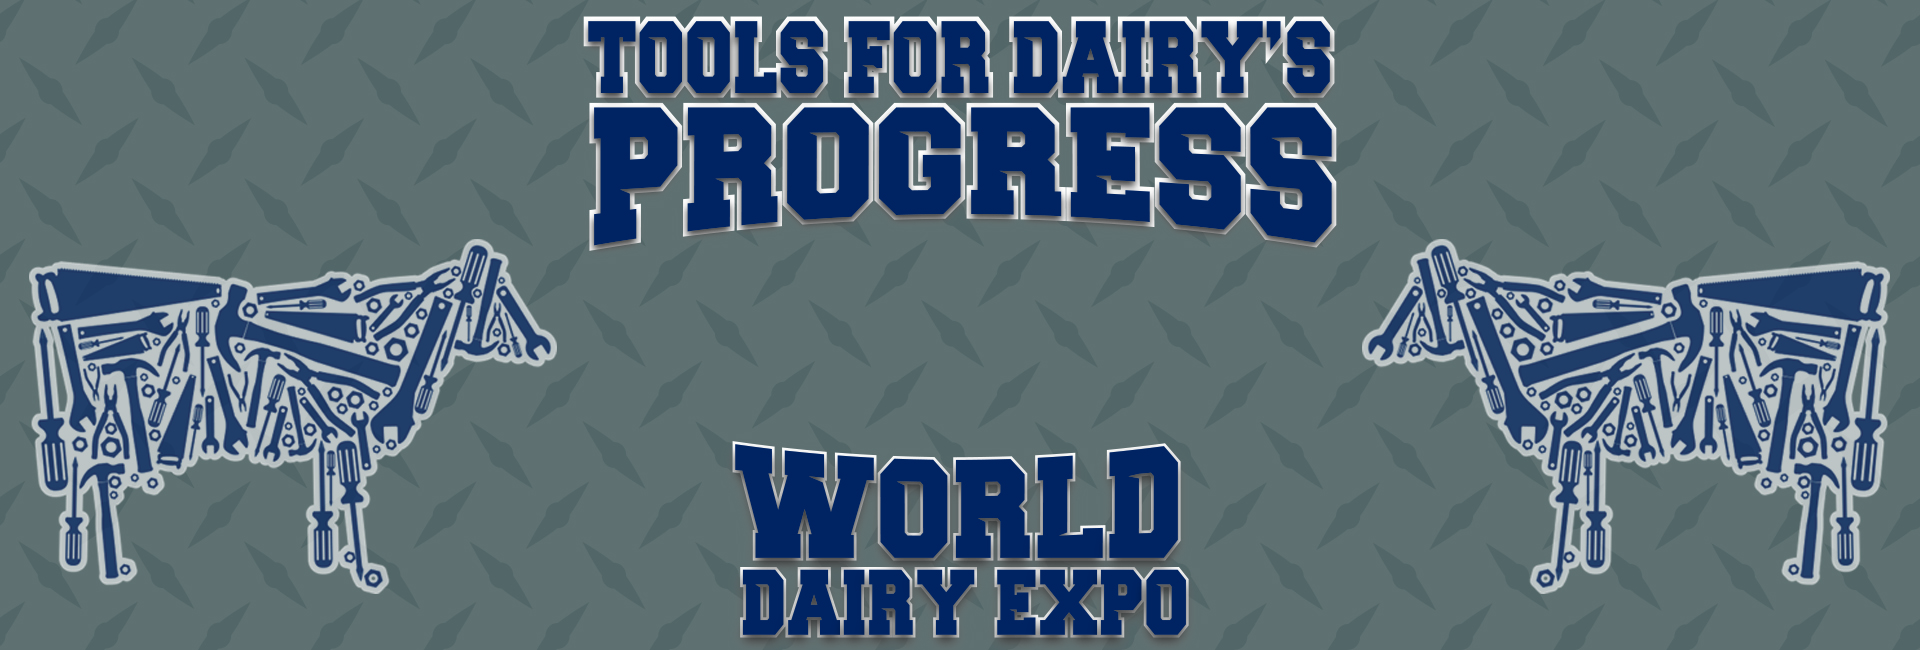 madison world dairy expo